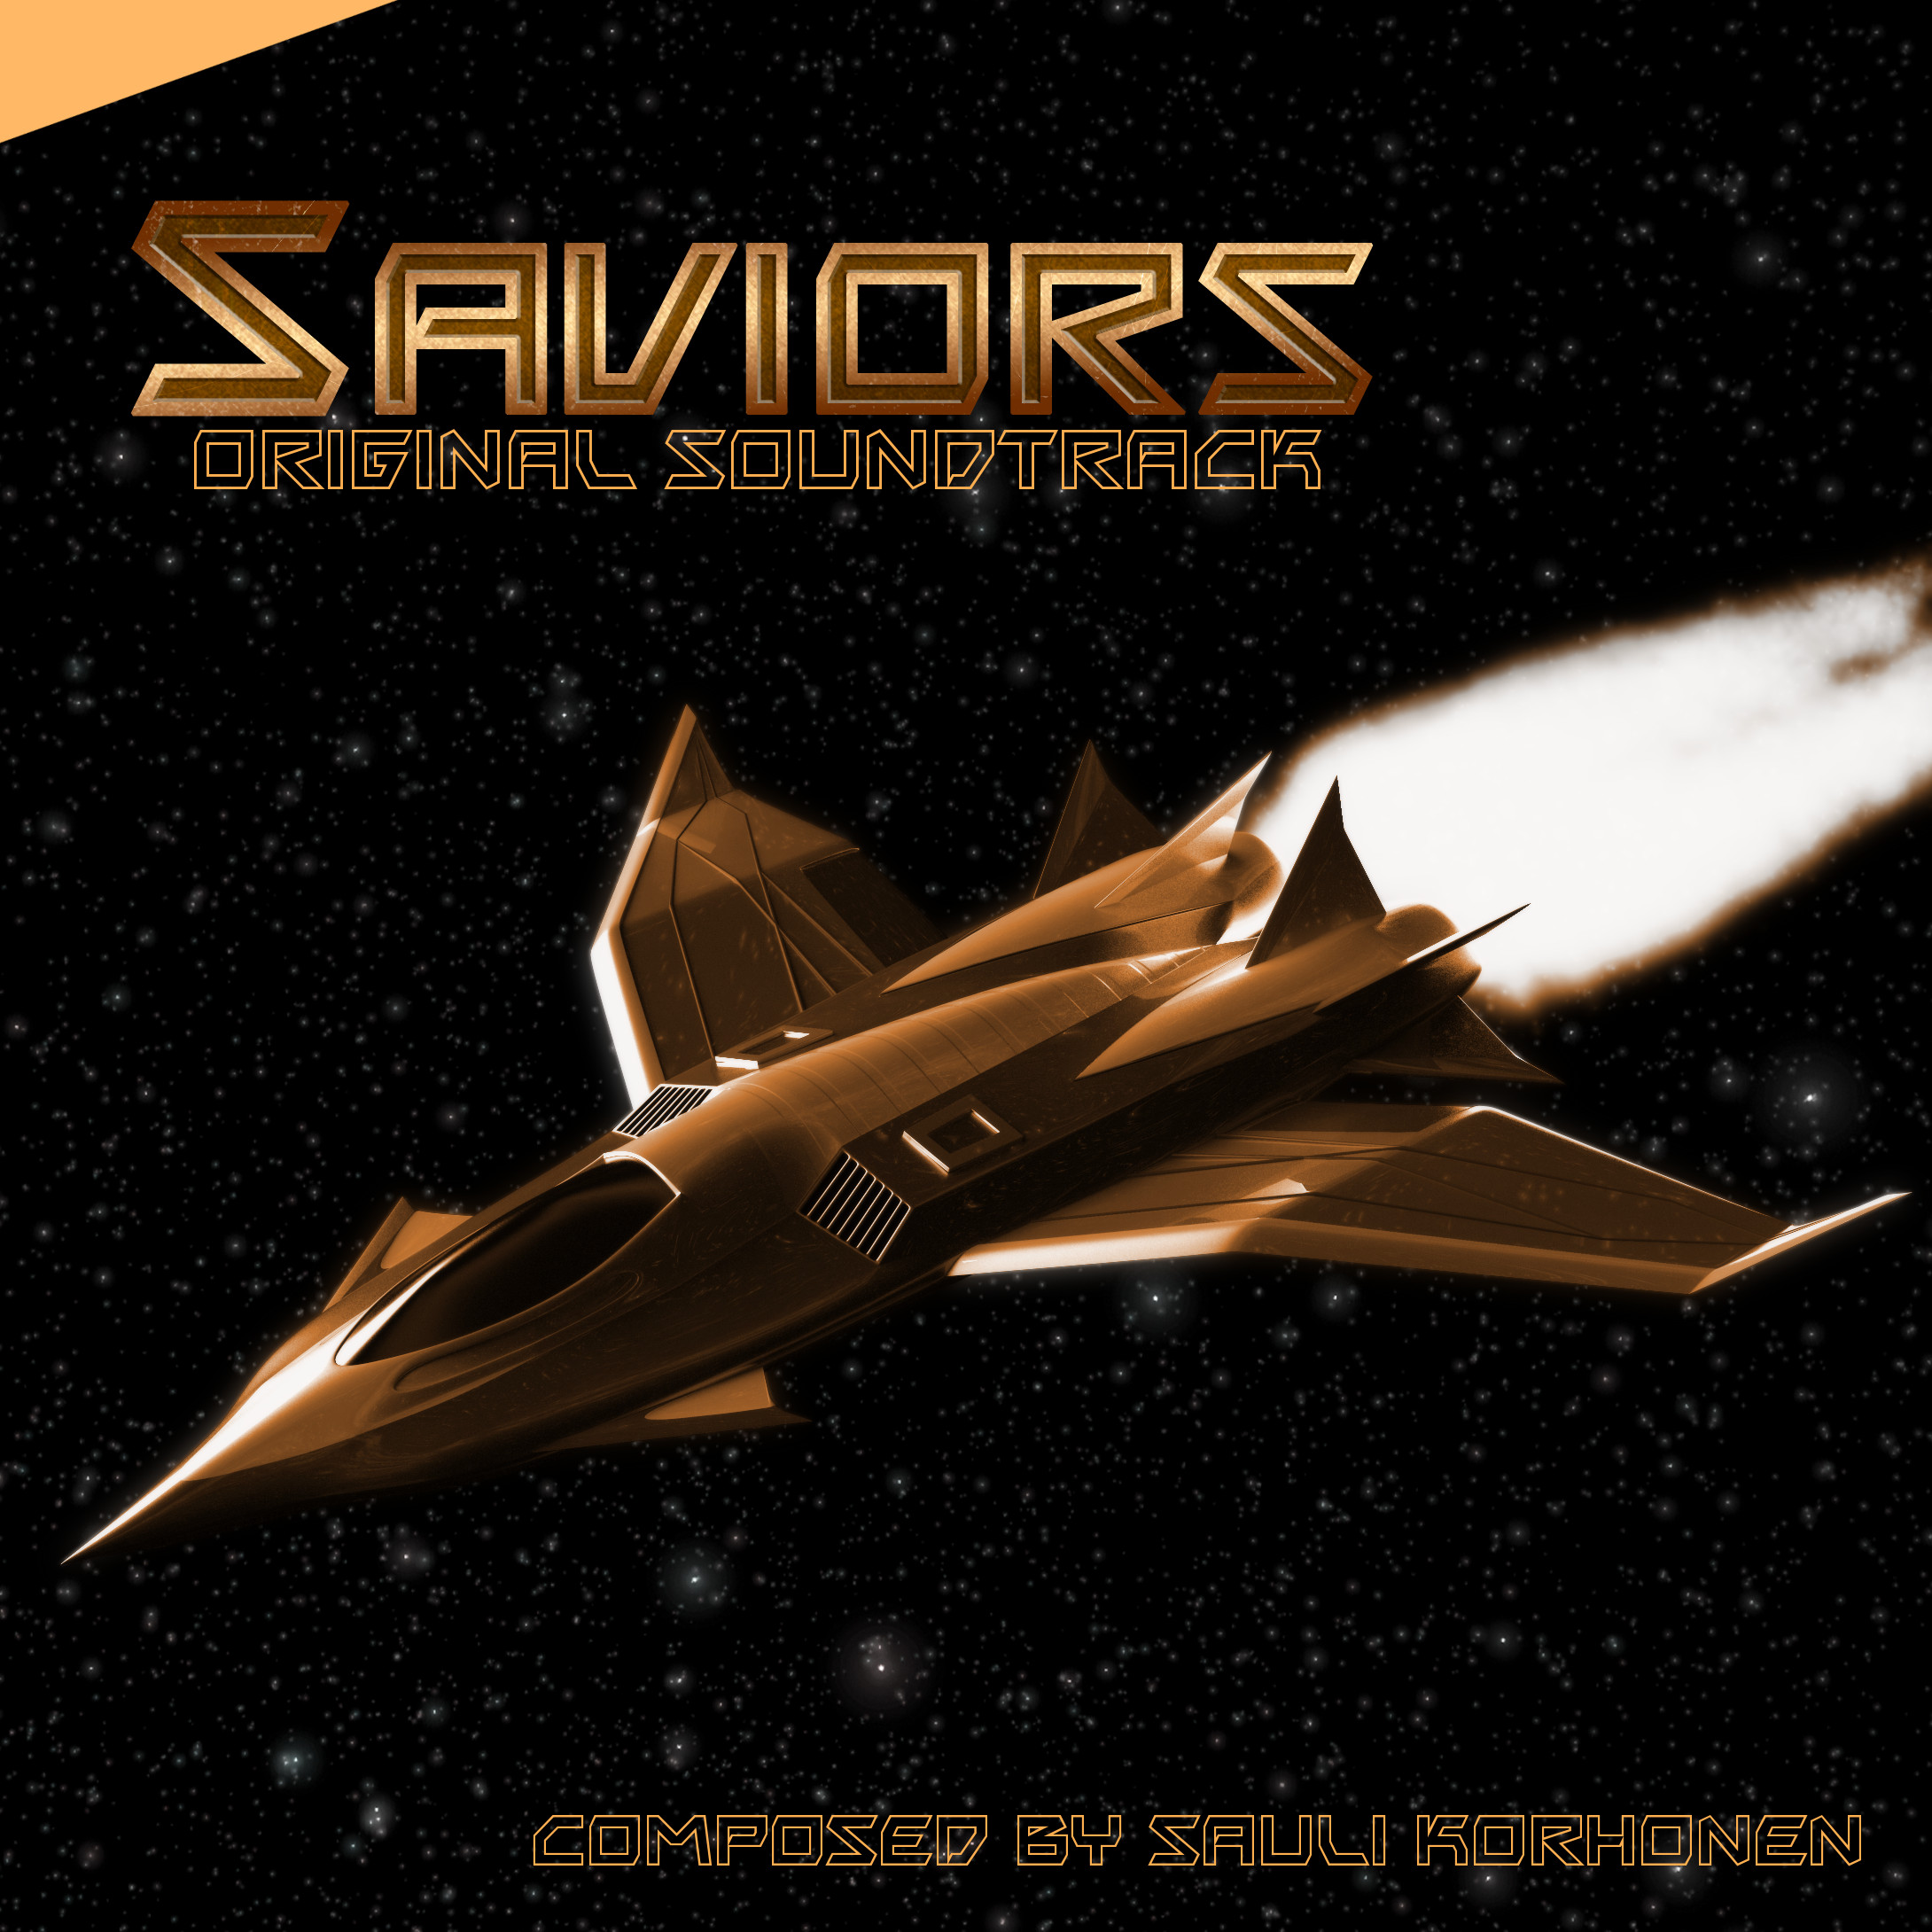 Star Saviors - Saviors OST DLC Steam Gift [USD 21.46]